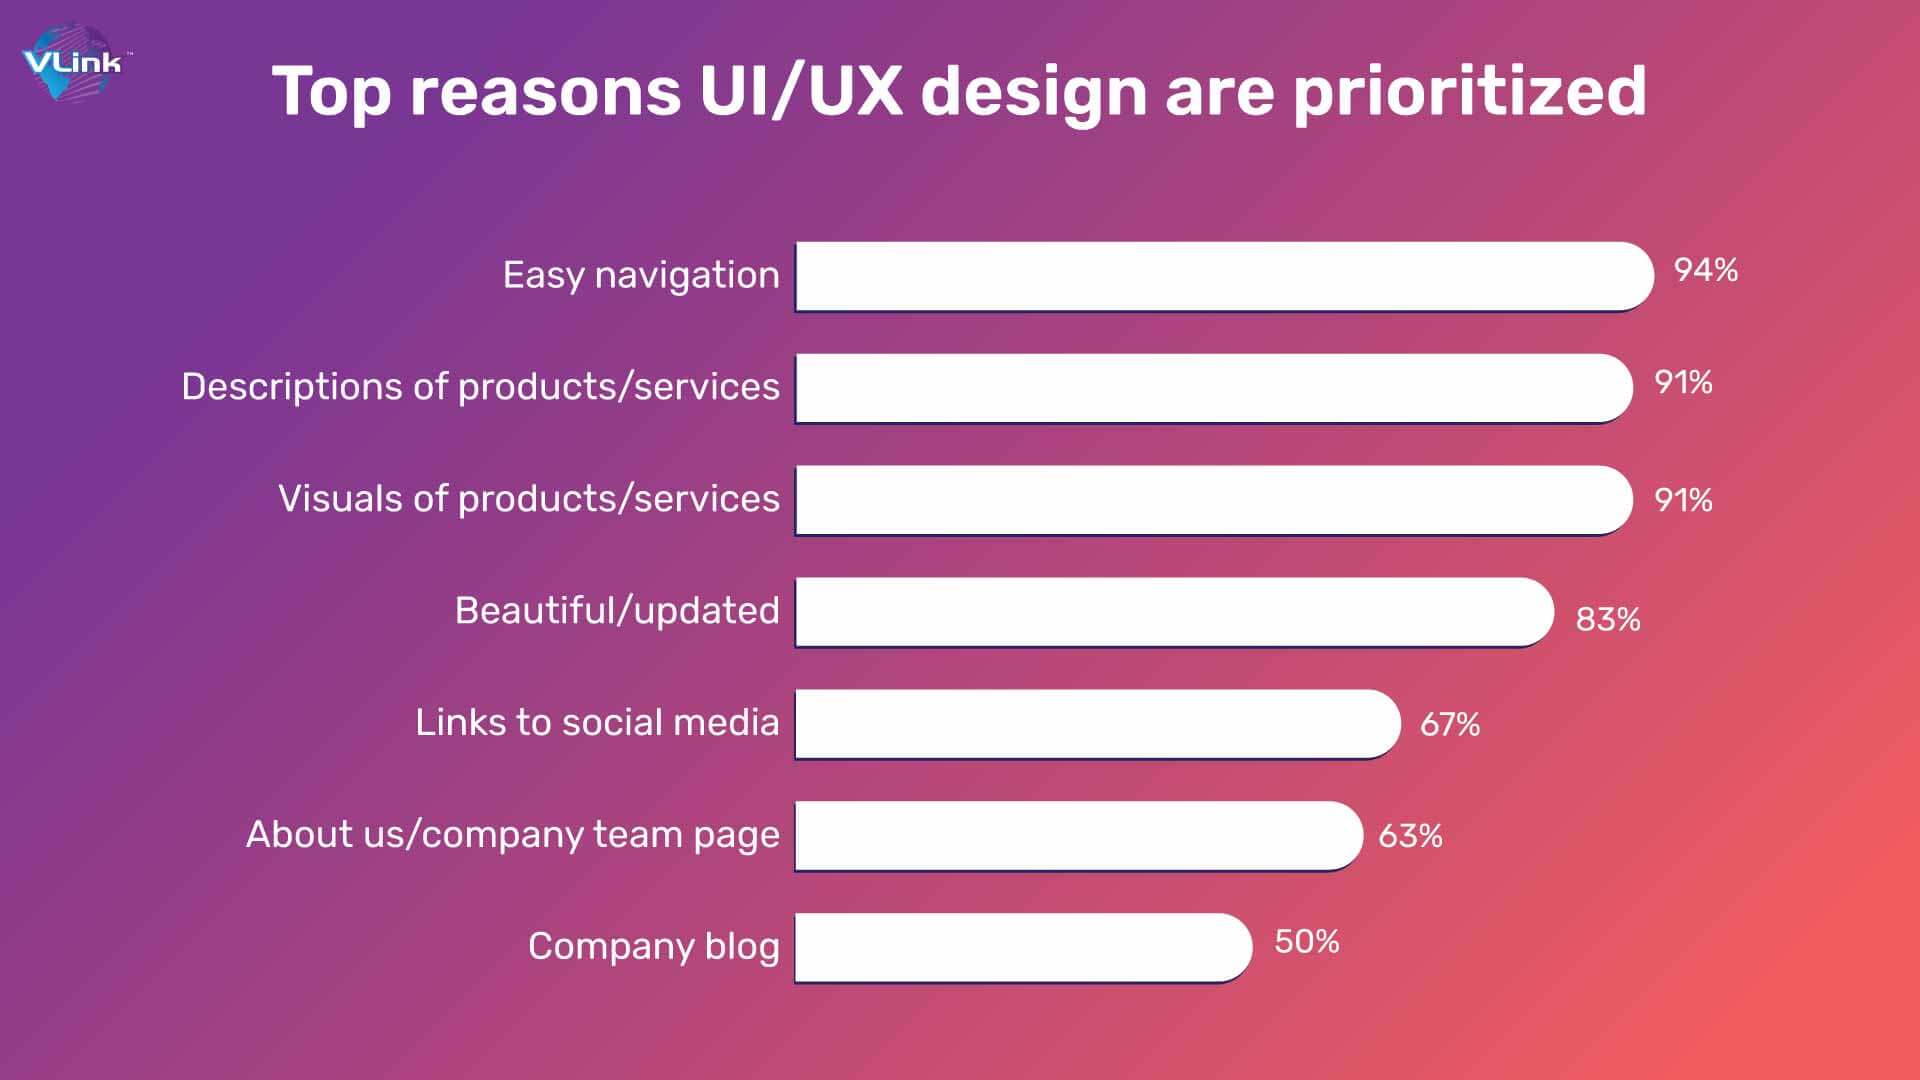 Top reasons UIUX design are prioritized